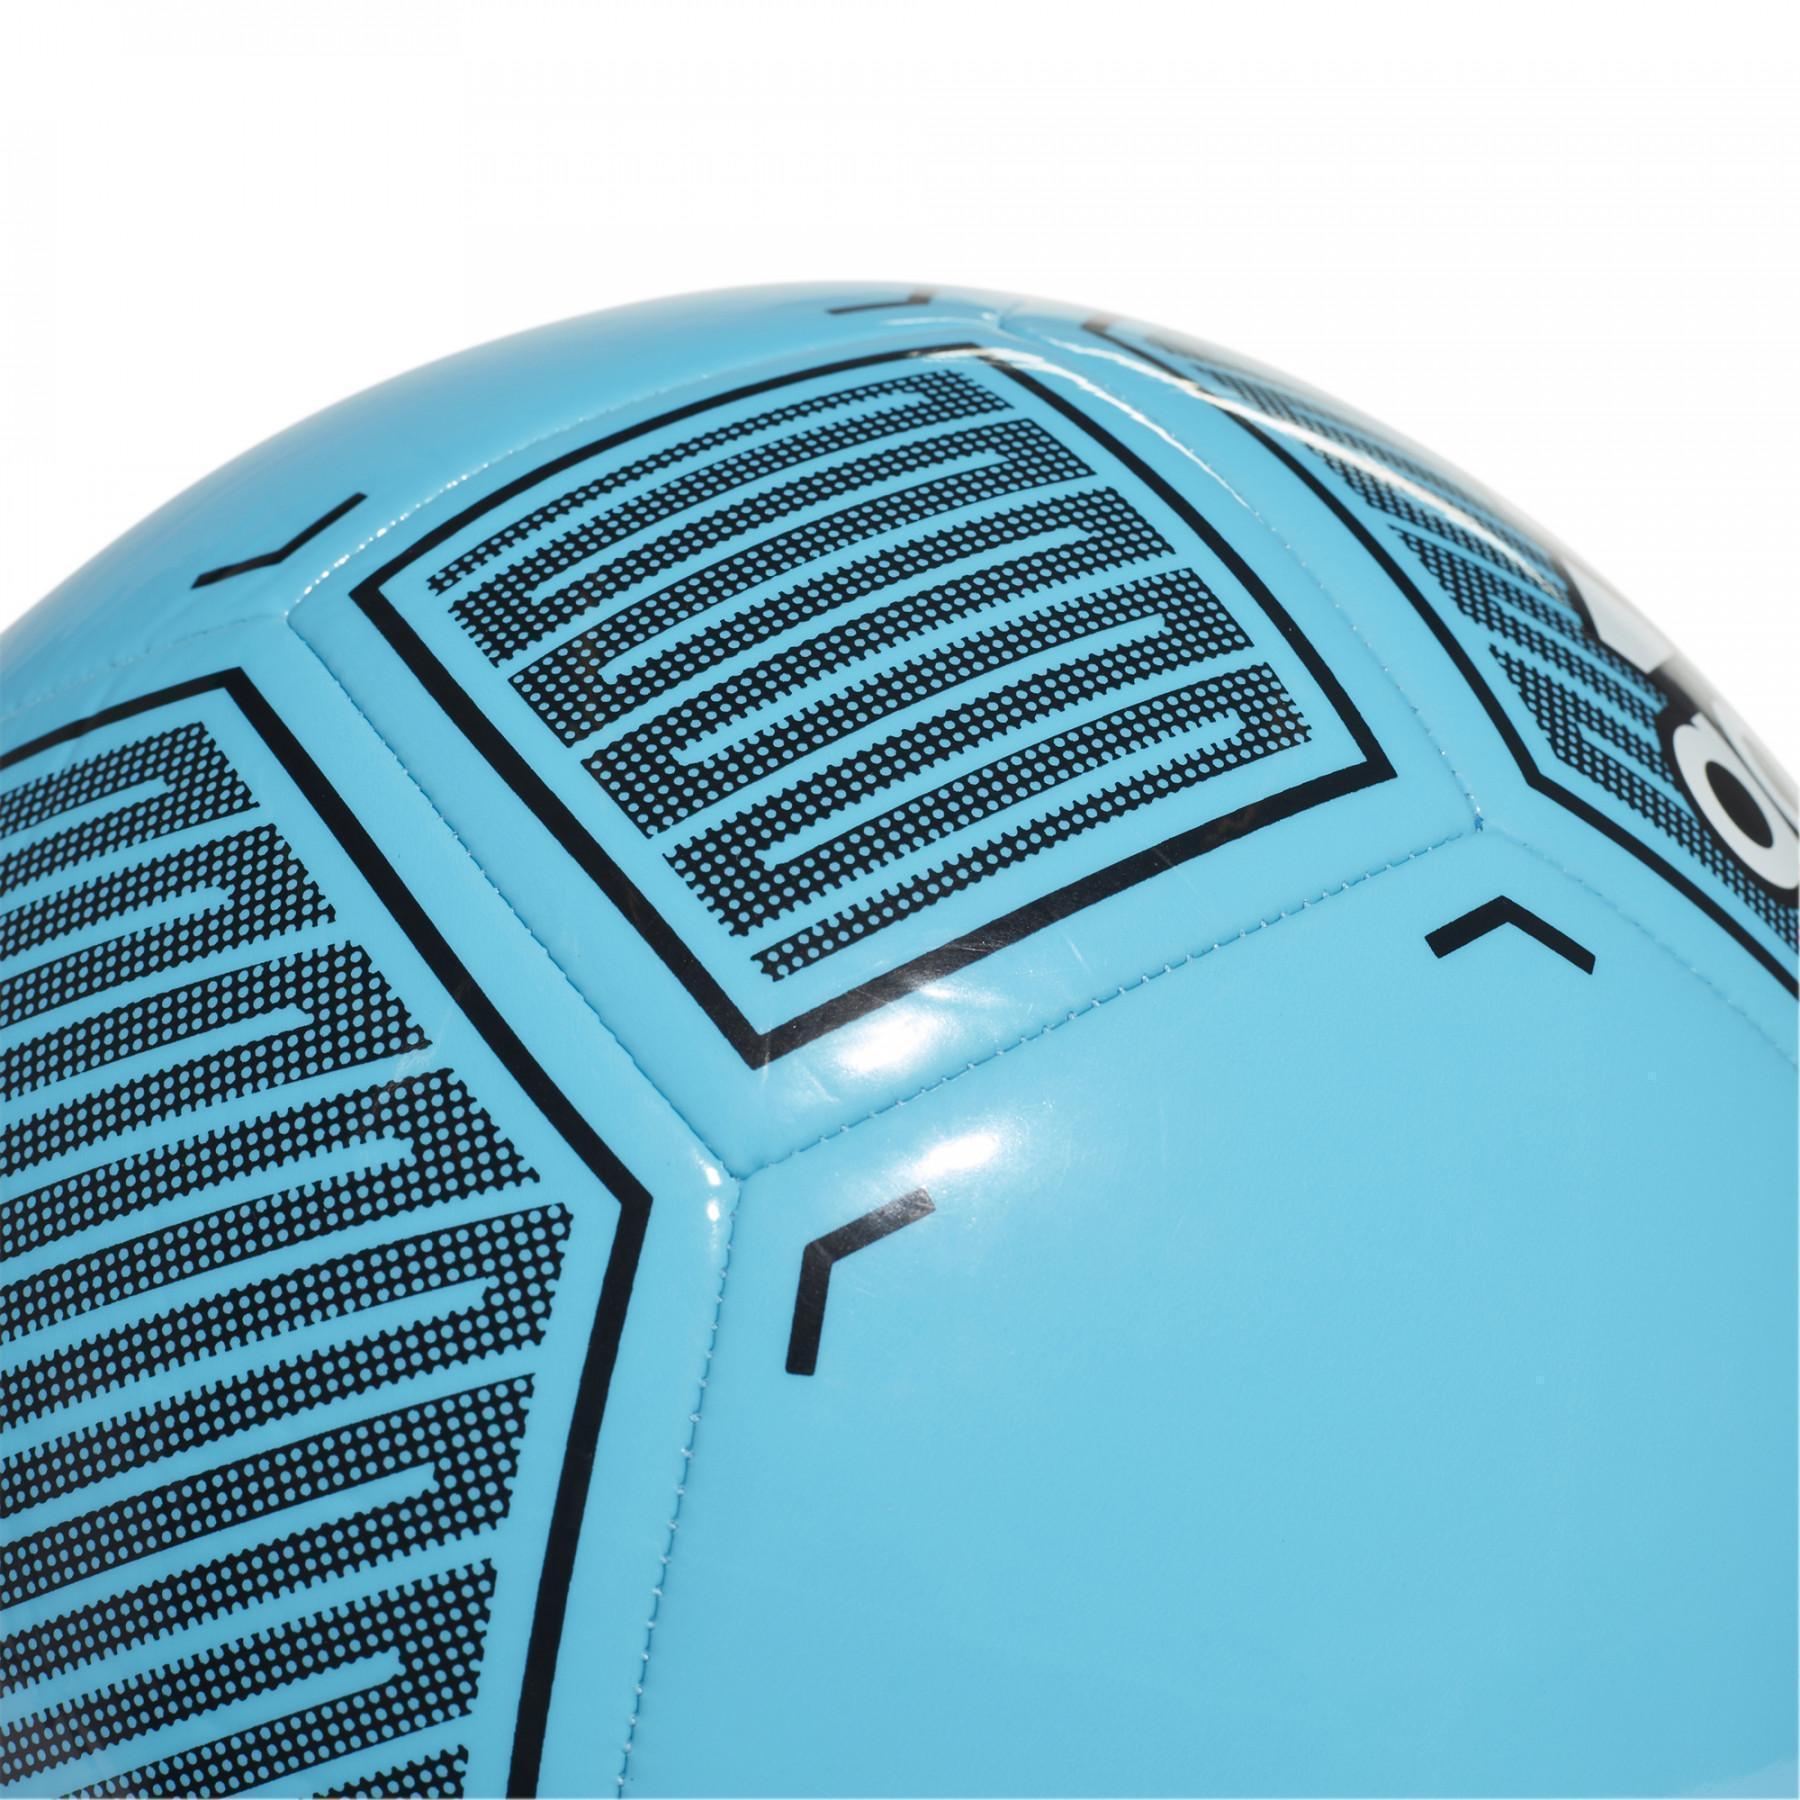 Pallone adidas Starlancer VI